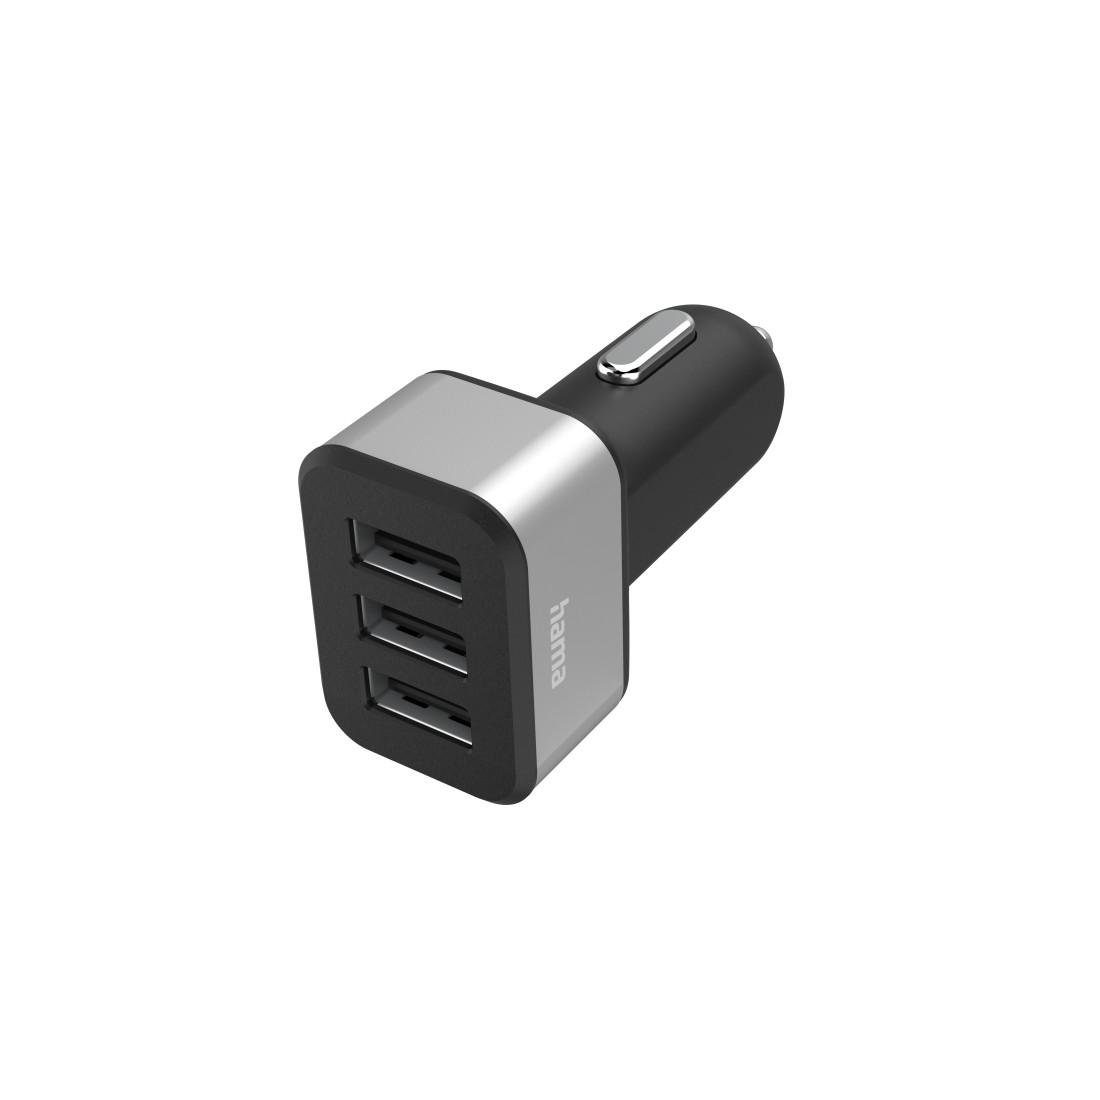 2-Fach USB Ladegerät 12-24V Zigarettenanzünder Quick Charge 3.0